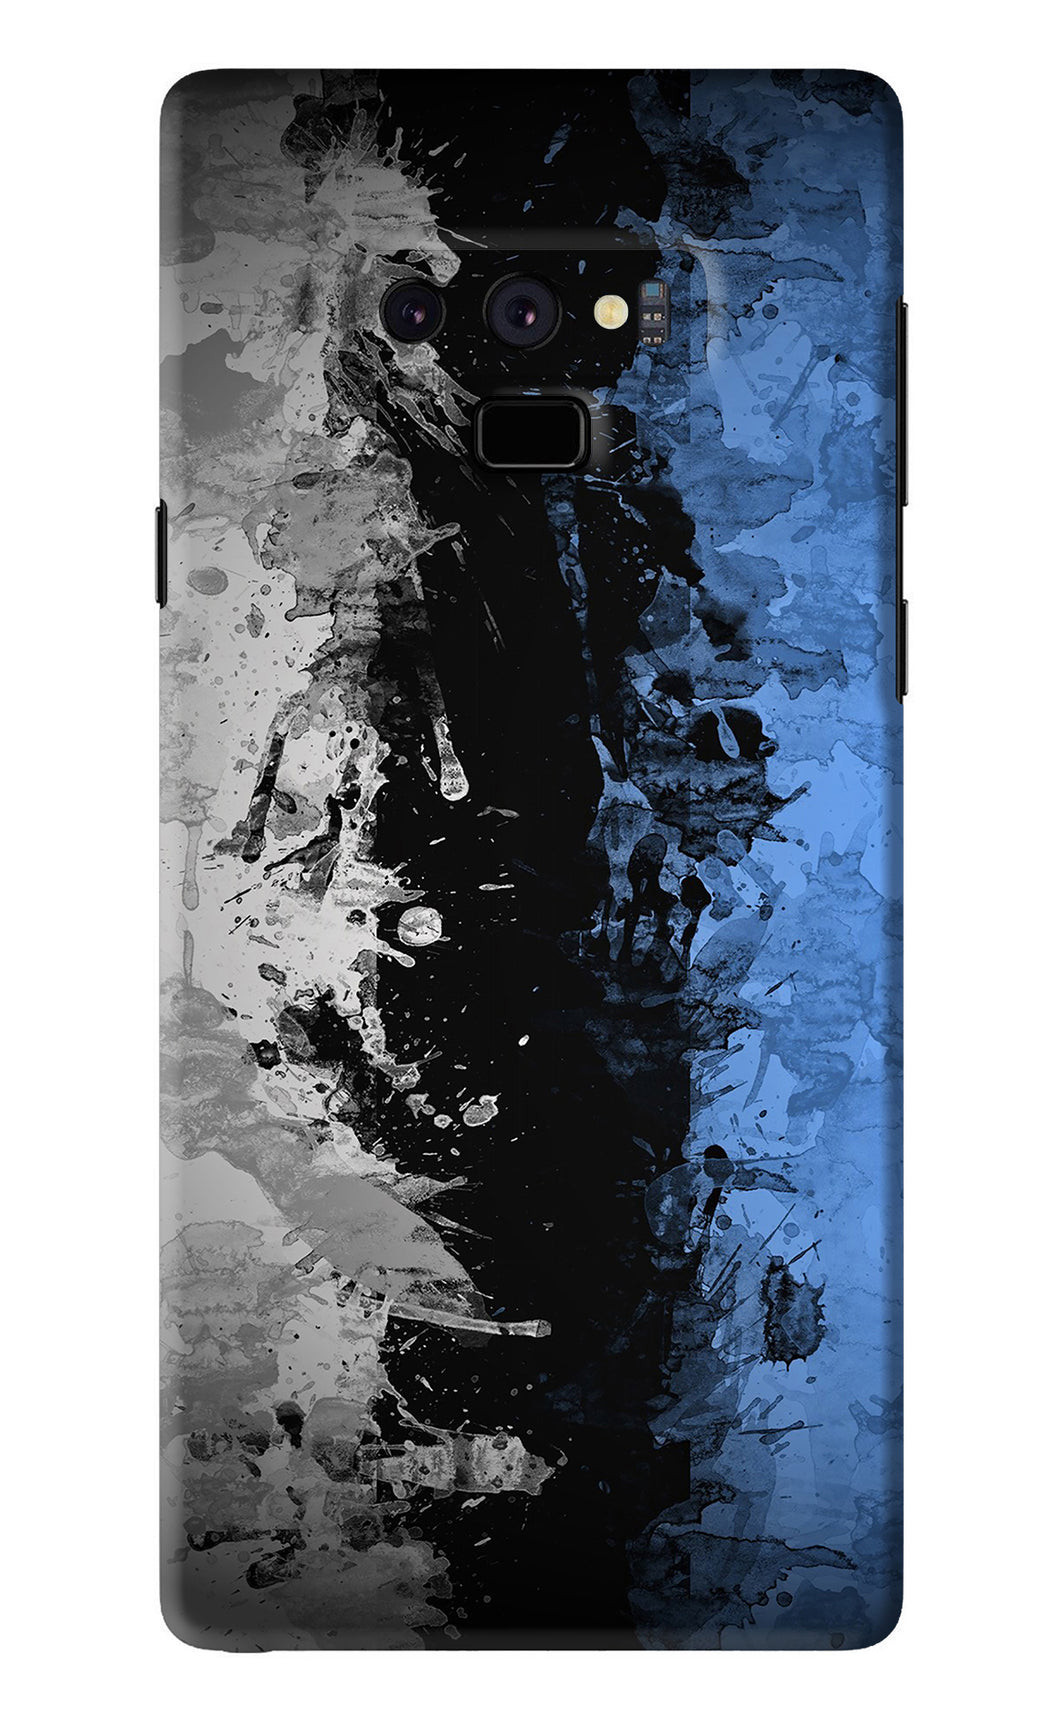 Artistic Design Samsung Galaxy Note 9 Back Skin Wrap